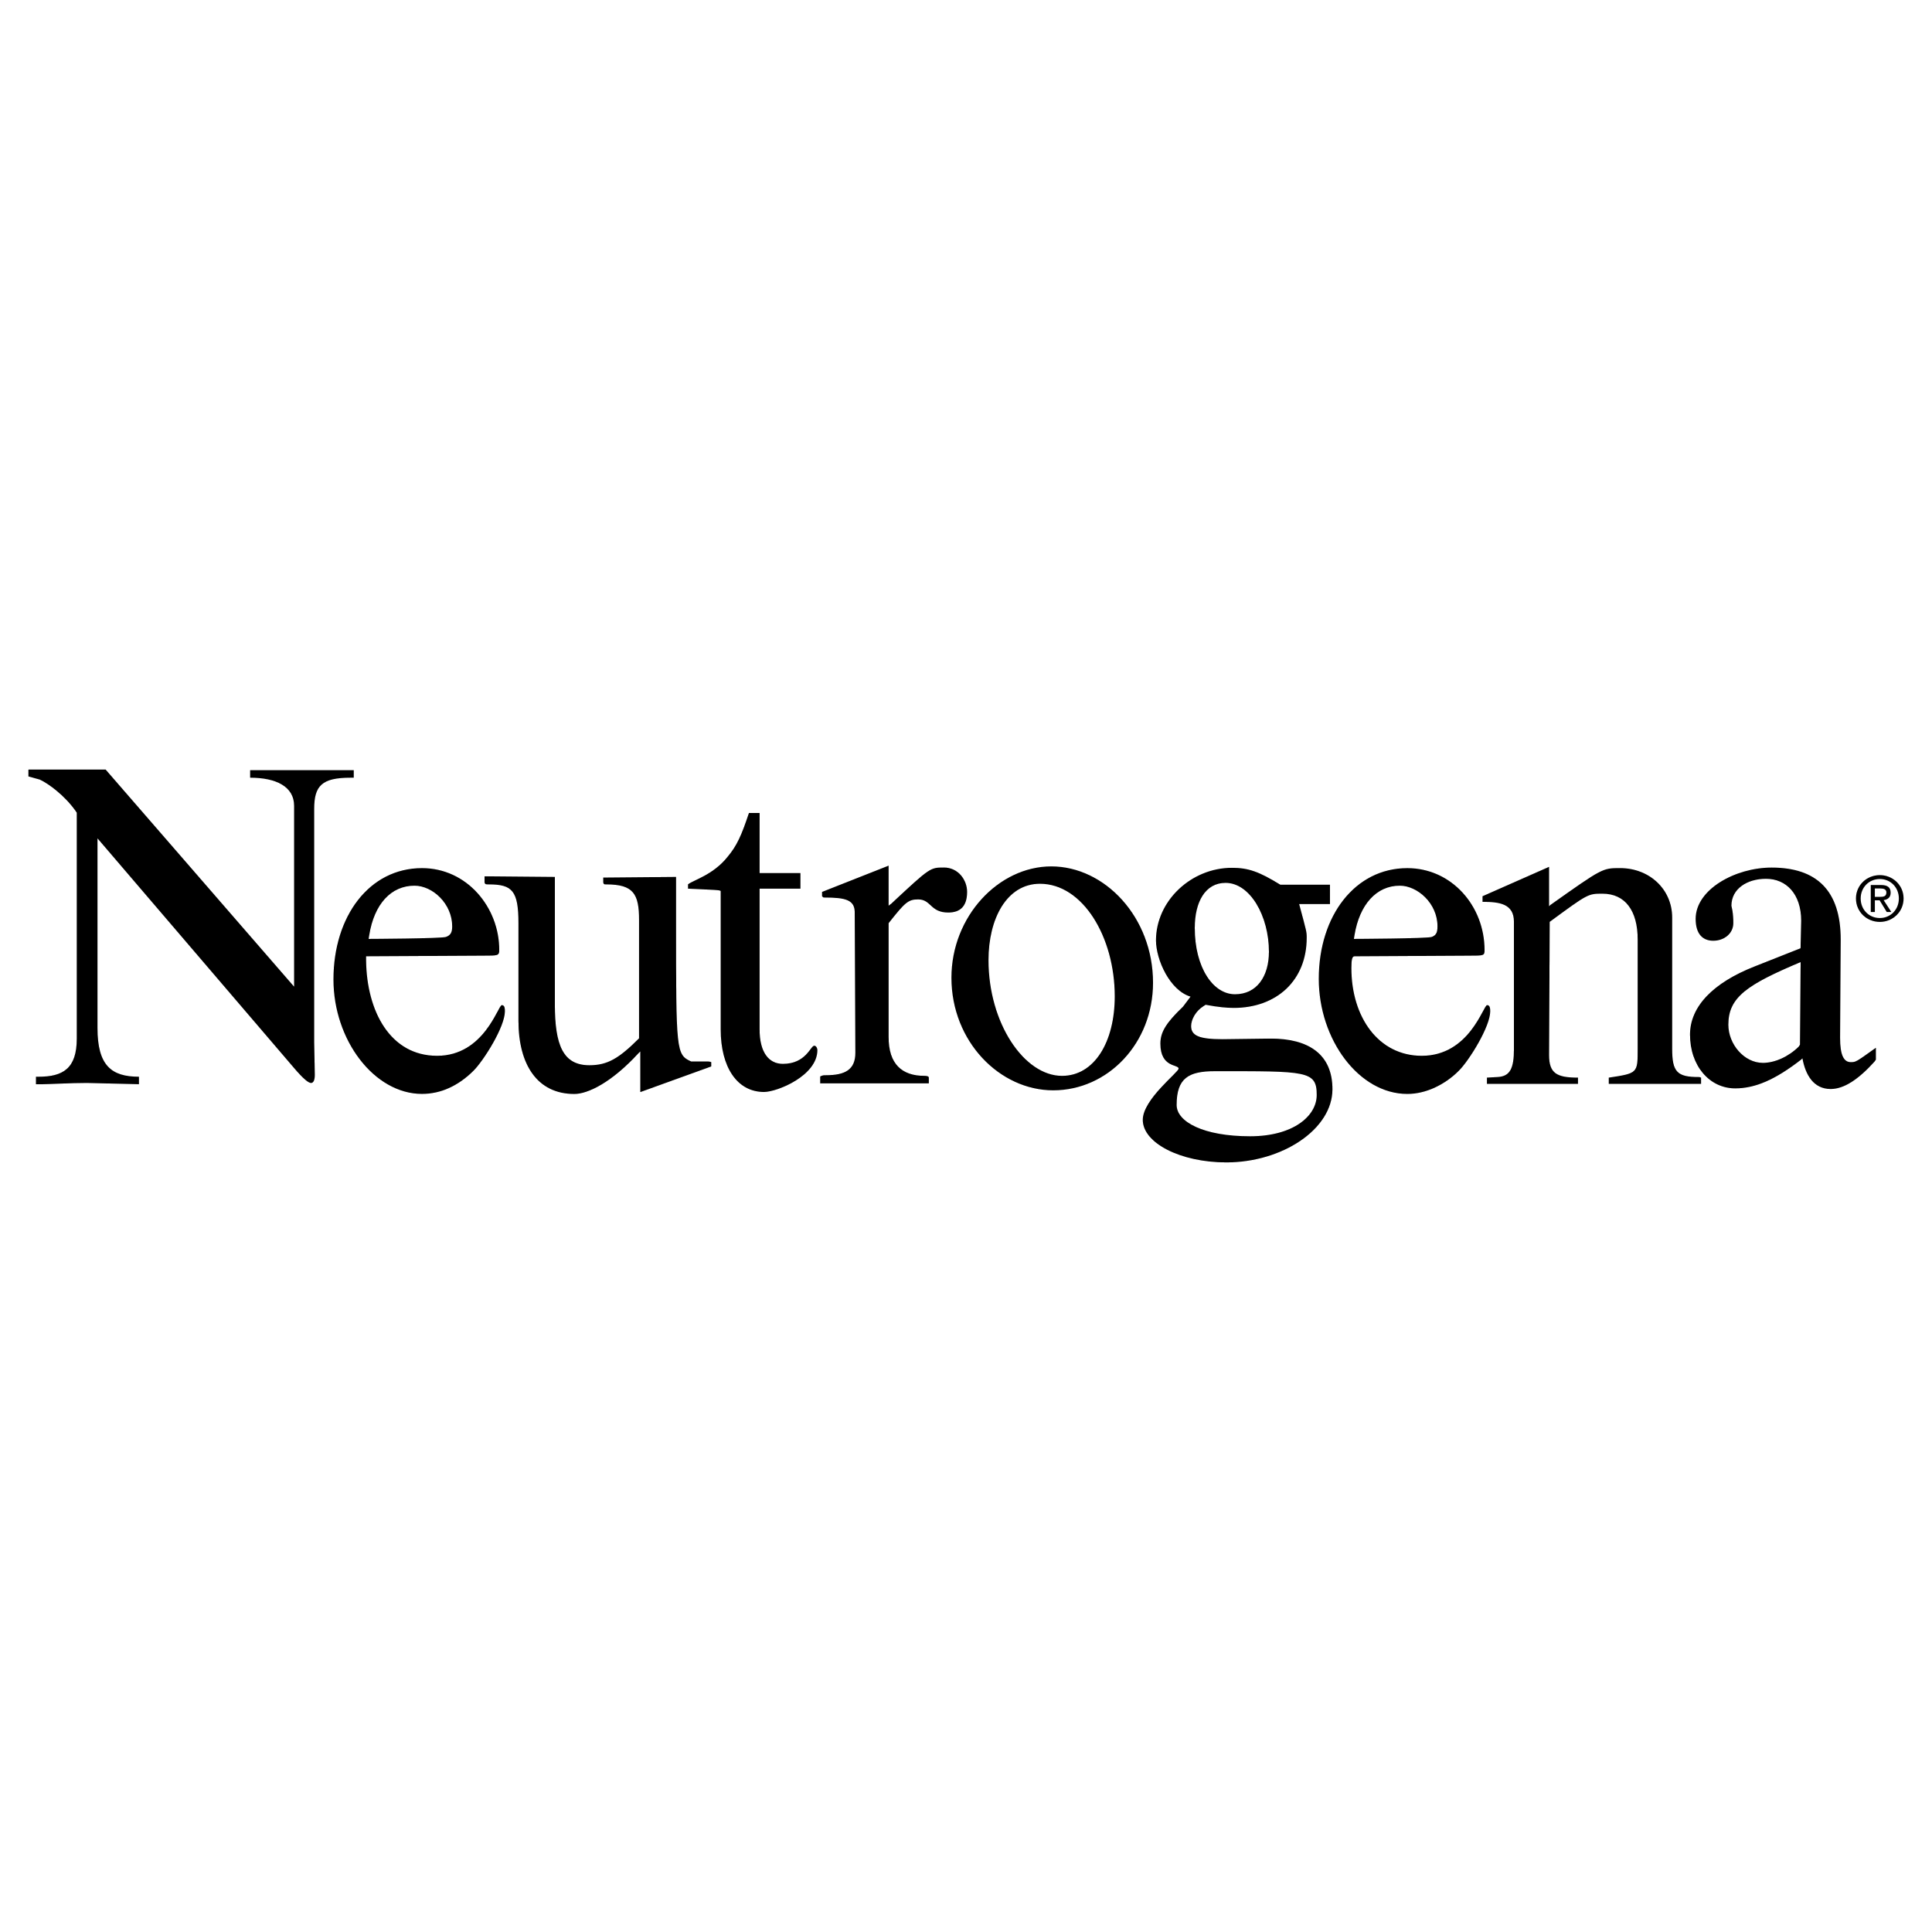 Neutrogena Logo PNG Vector (EPS) Free Download